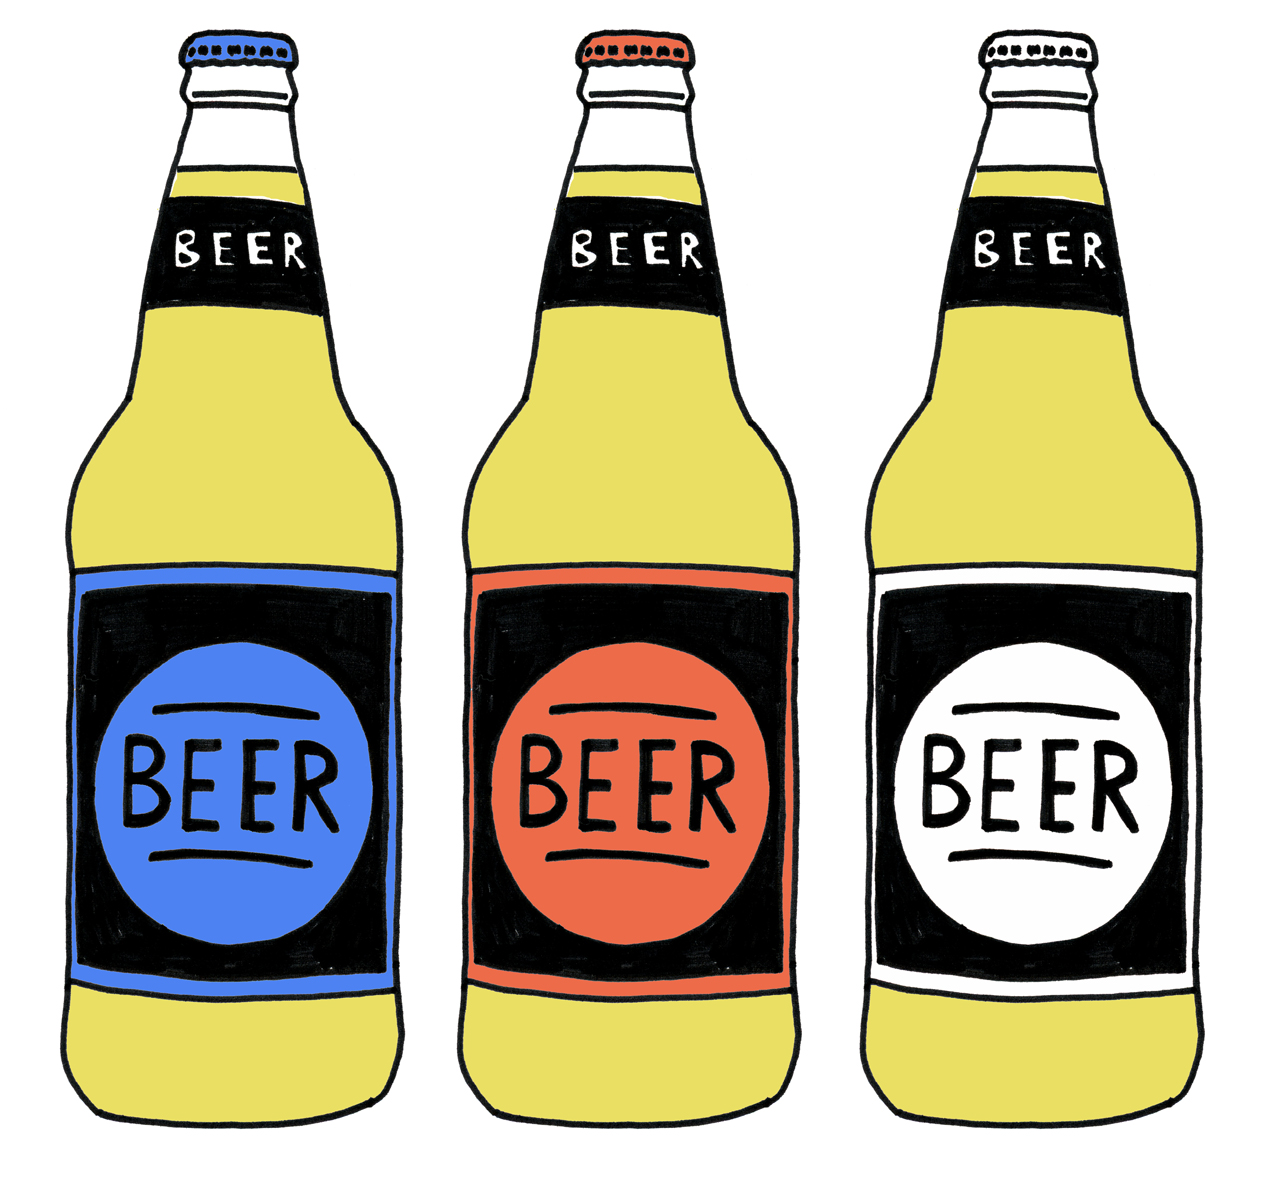 Beer and Cider bottle illustrations | || Analogue Forever ...